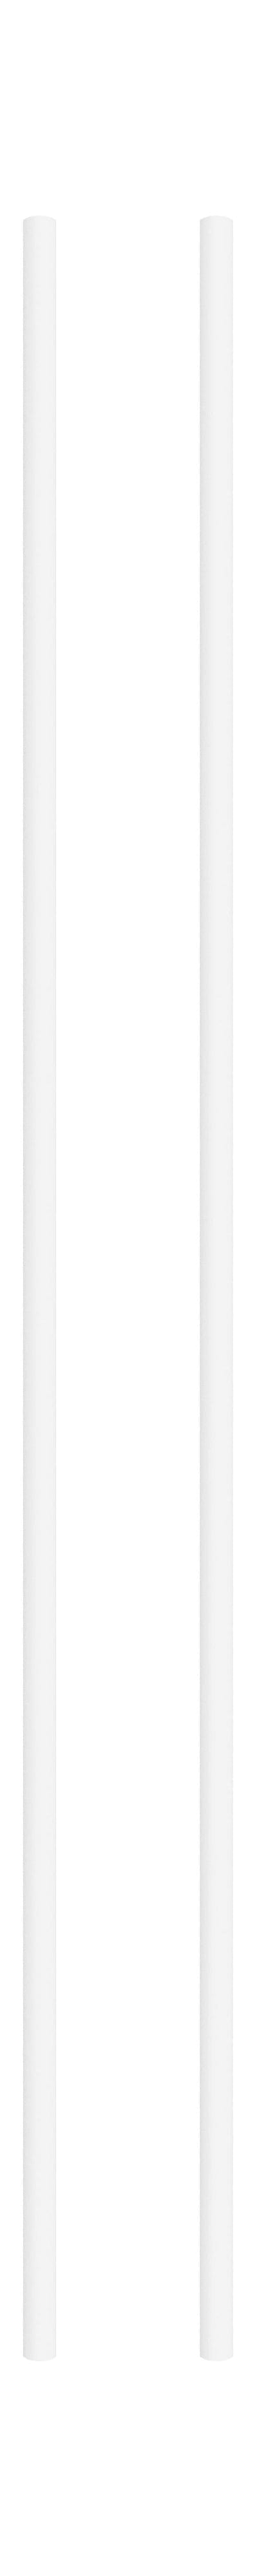 Moebe Shelving System/Wall Shelving Leg 115 Cm White, Set Of 2